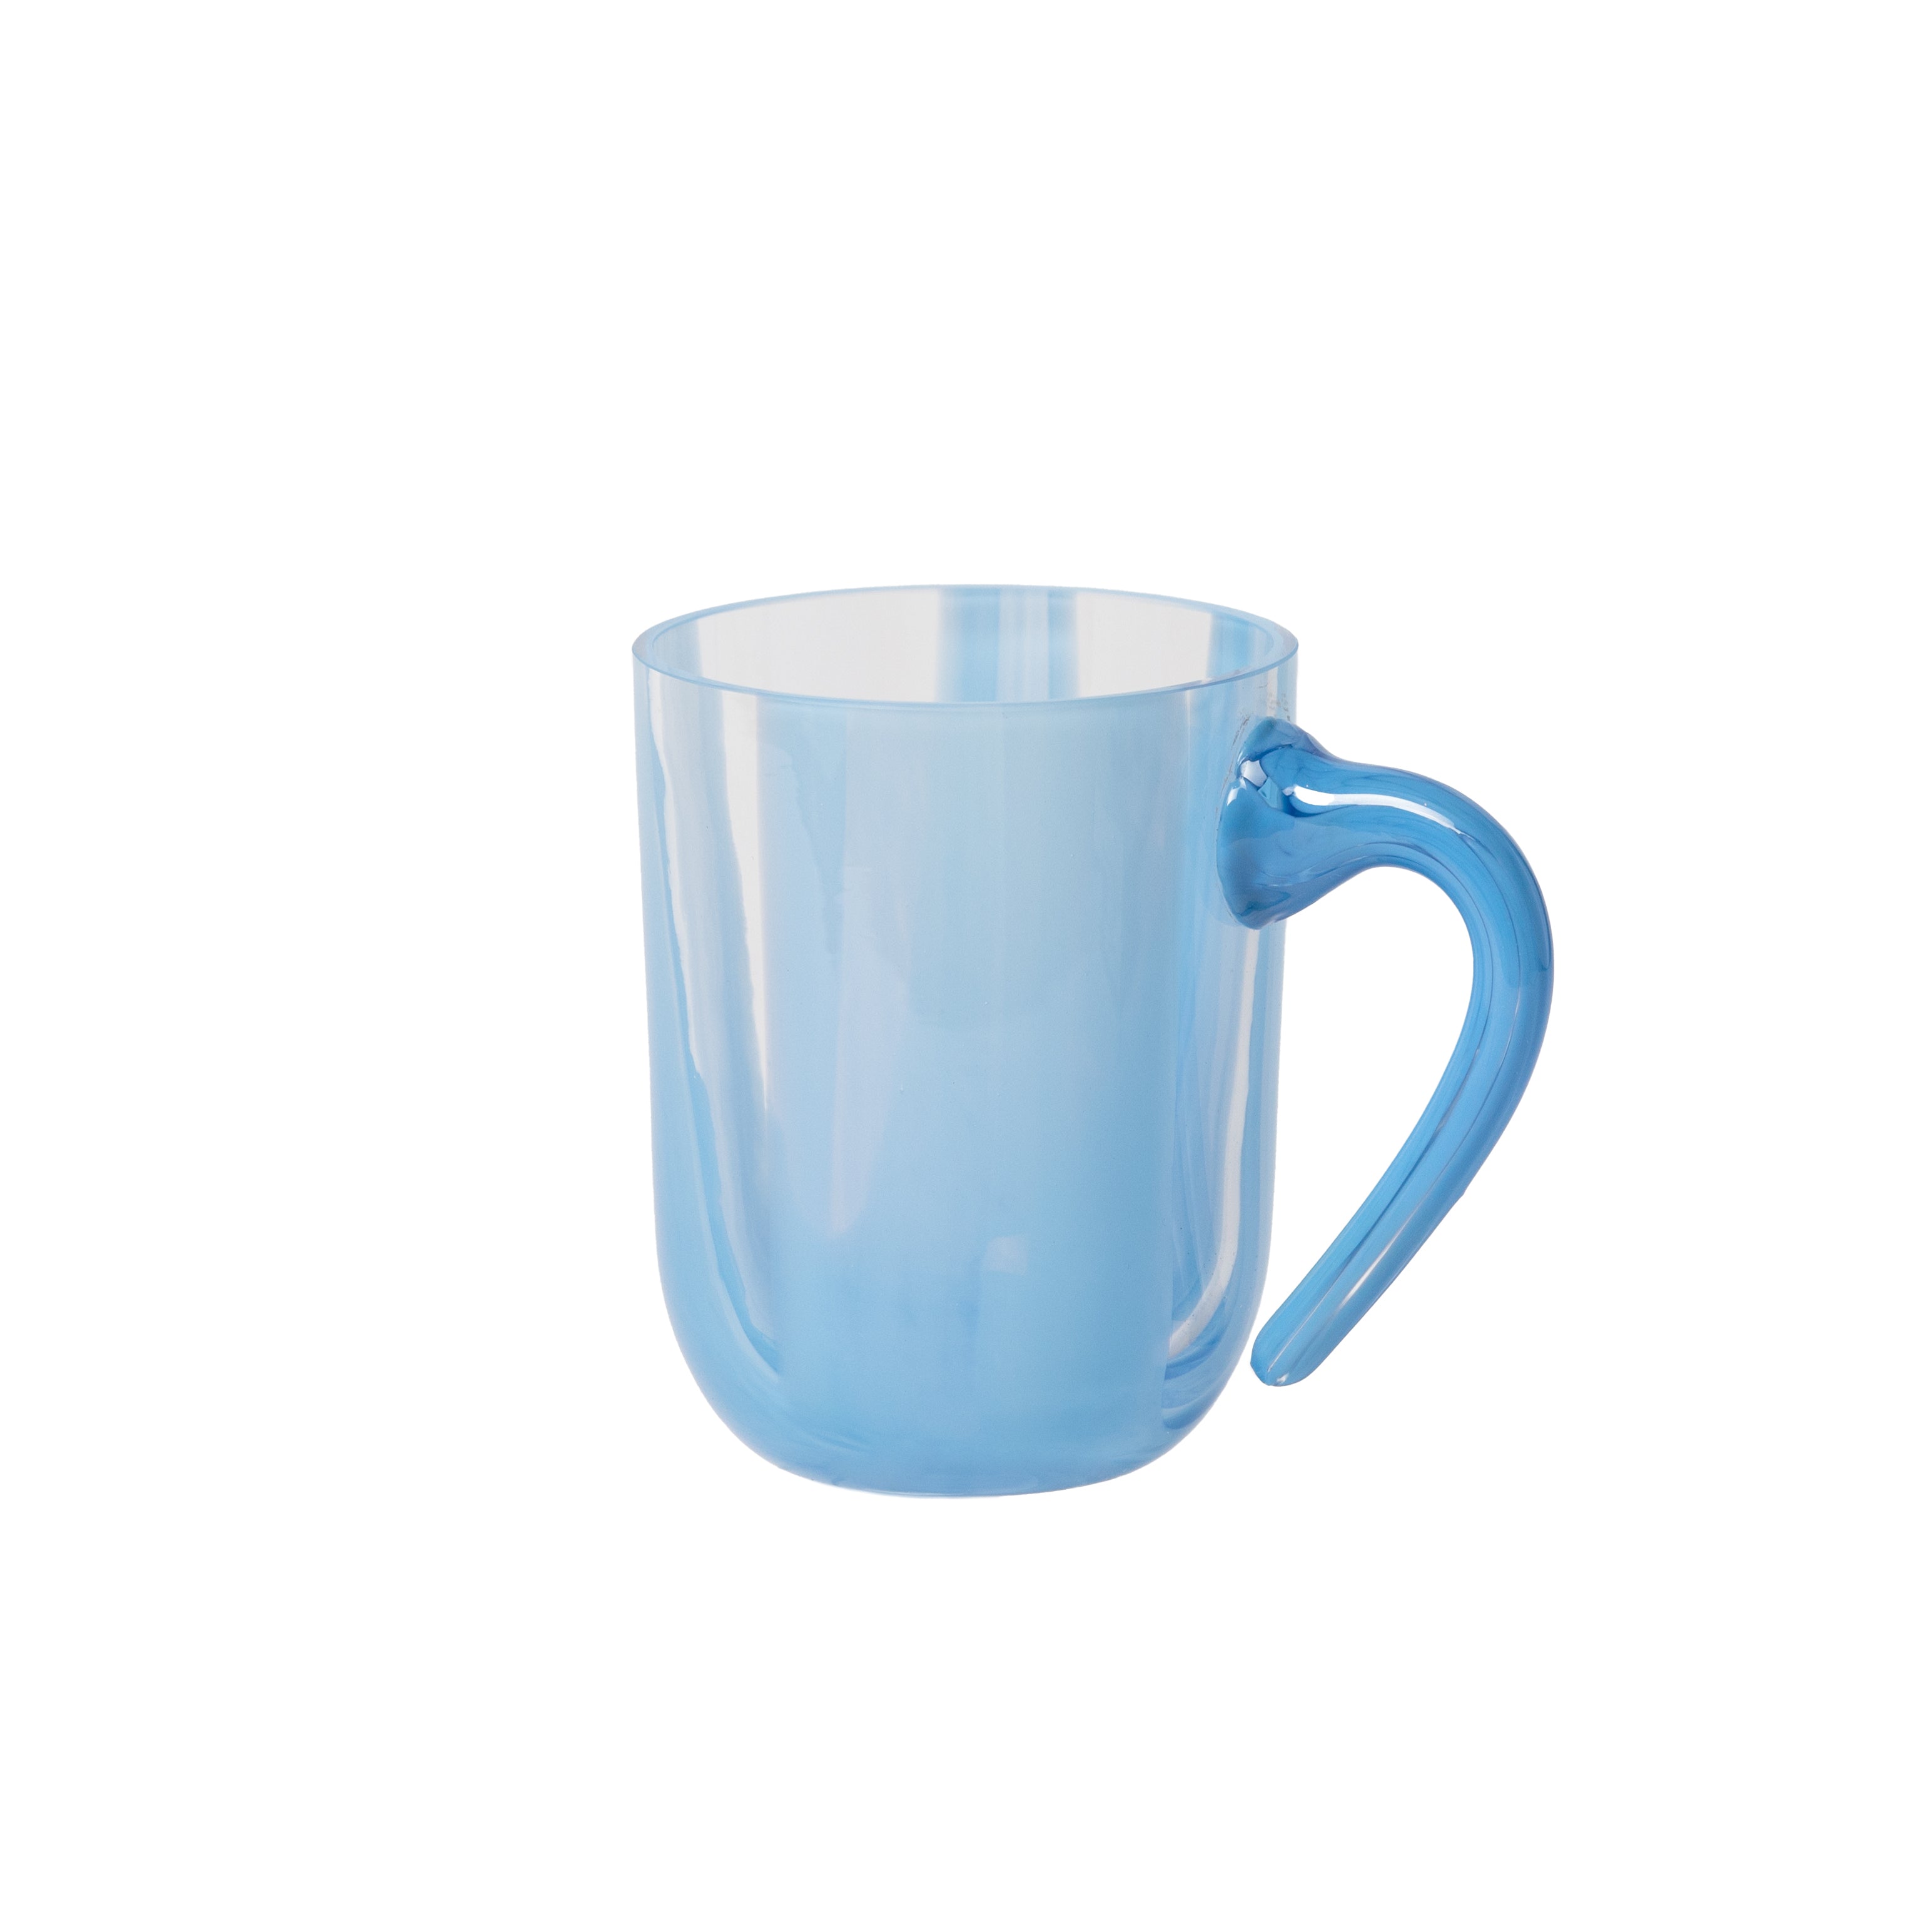 Blue glass mug